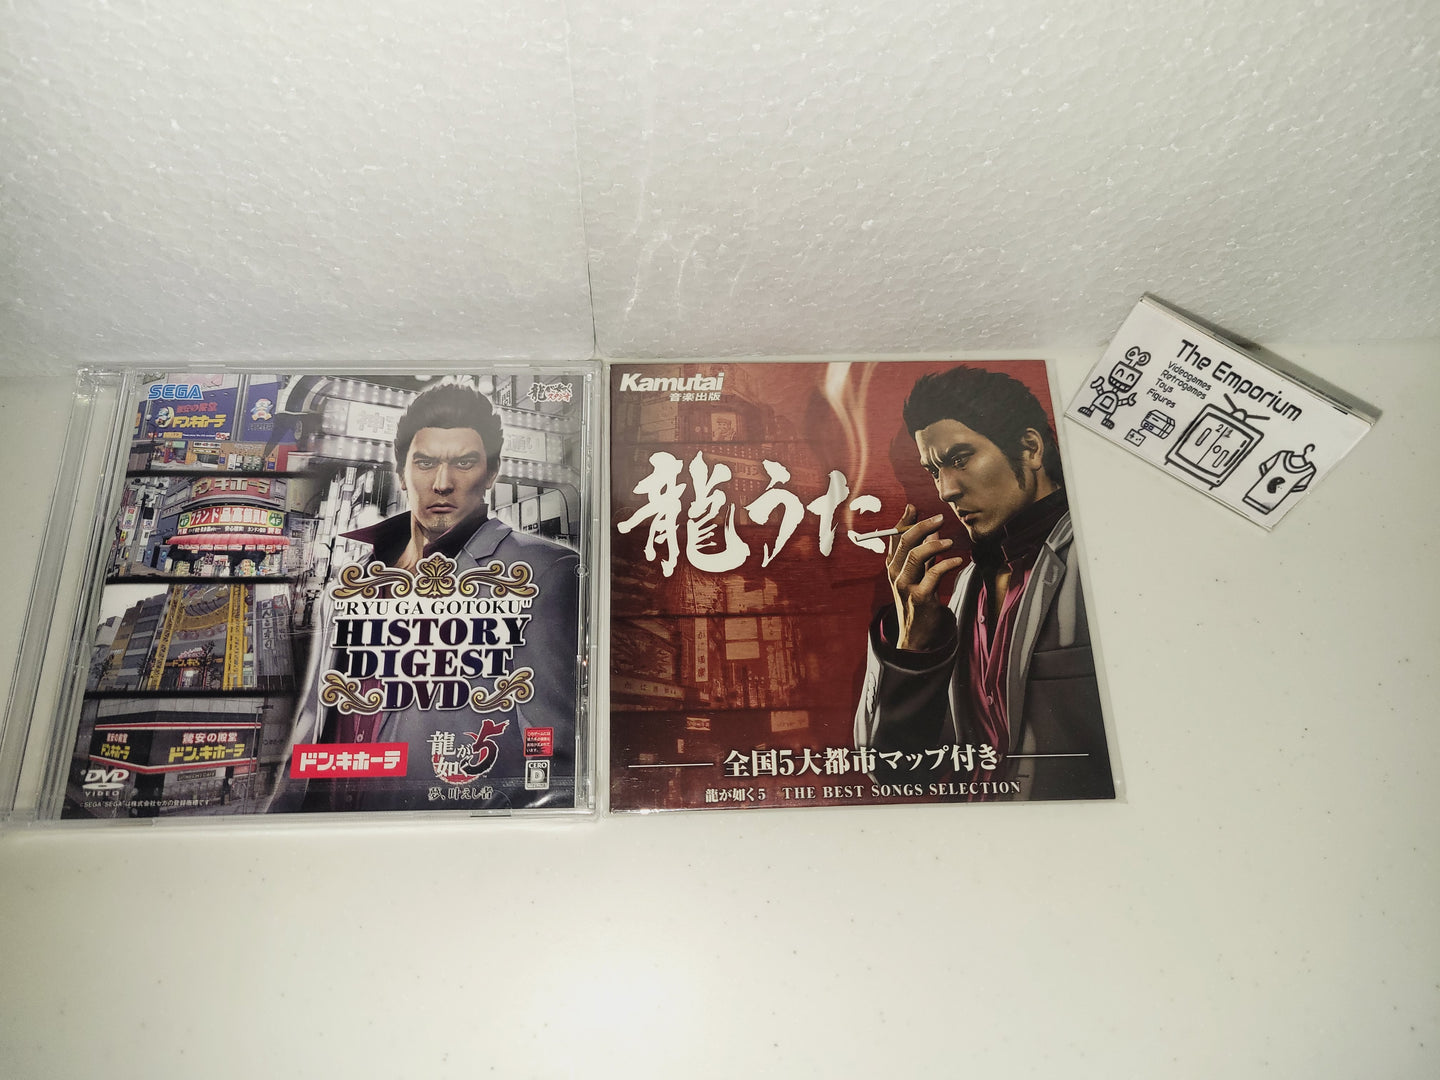 Ryu Ga Gotoku History Digest DVD + Kamutai Music Cd - video DVD